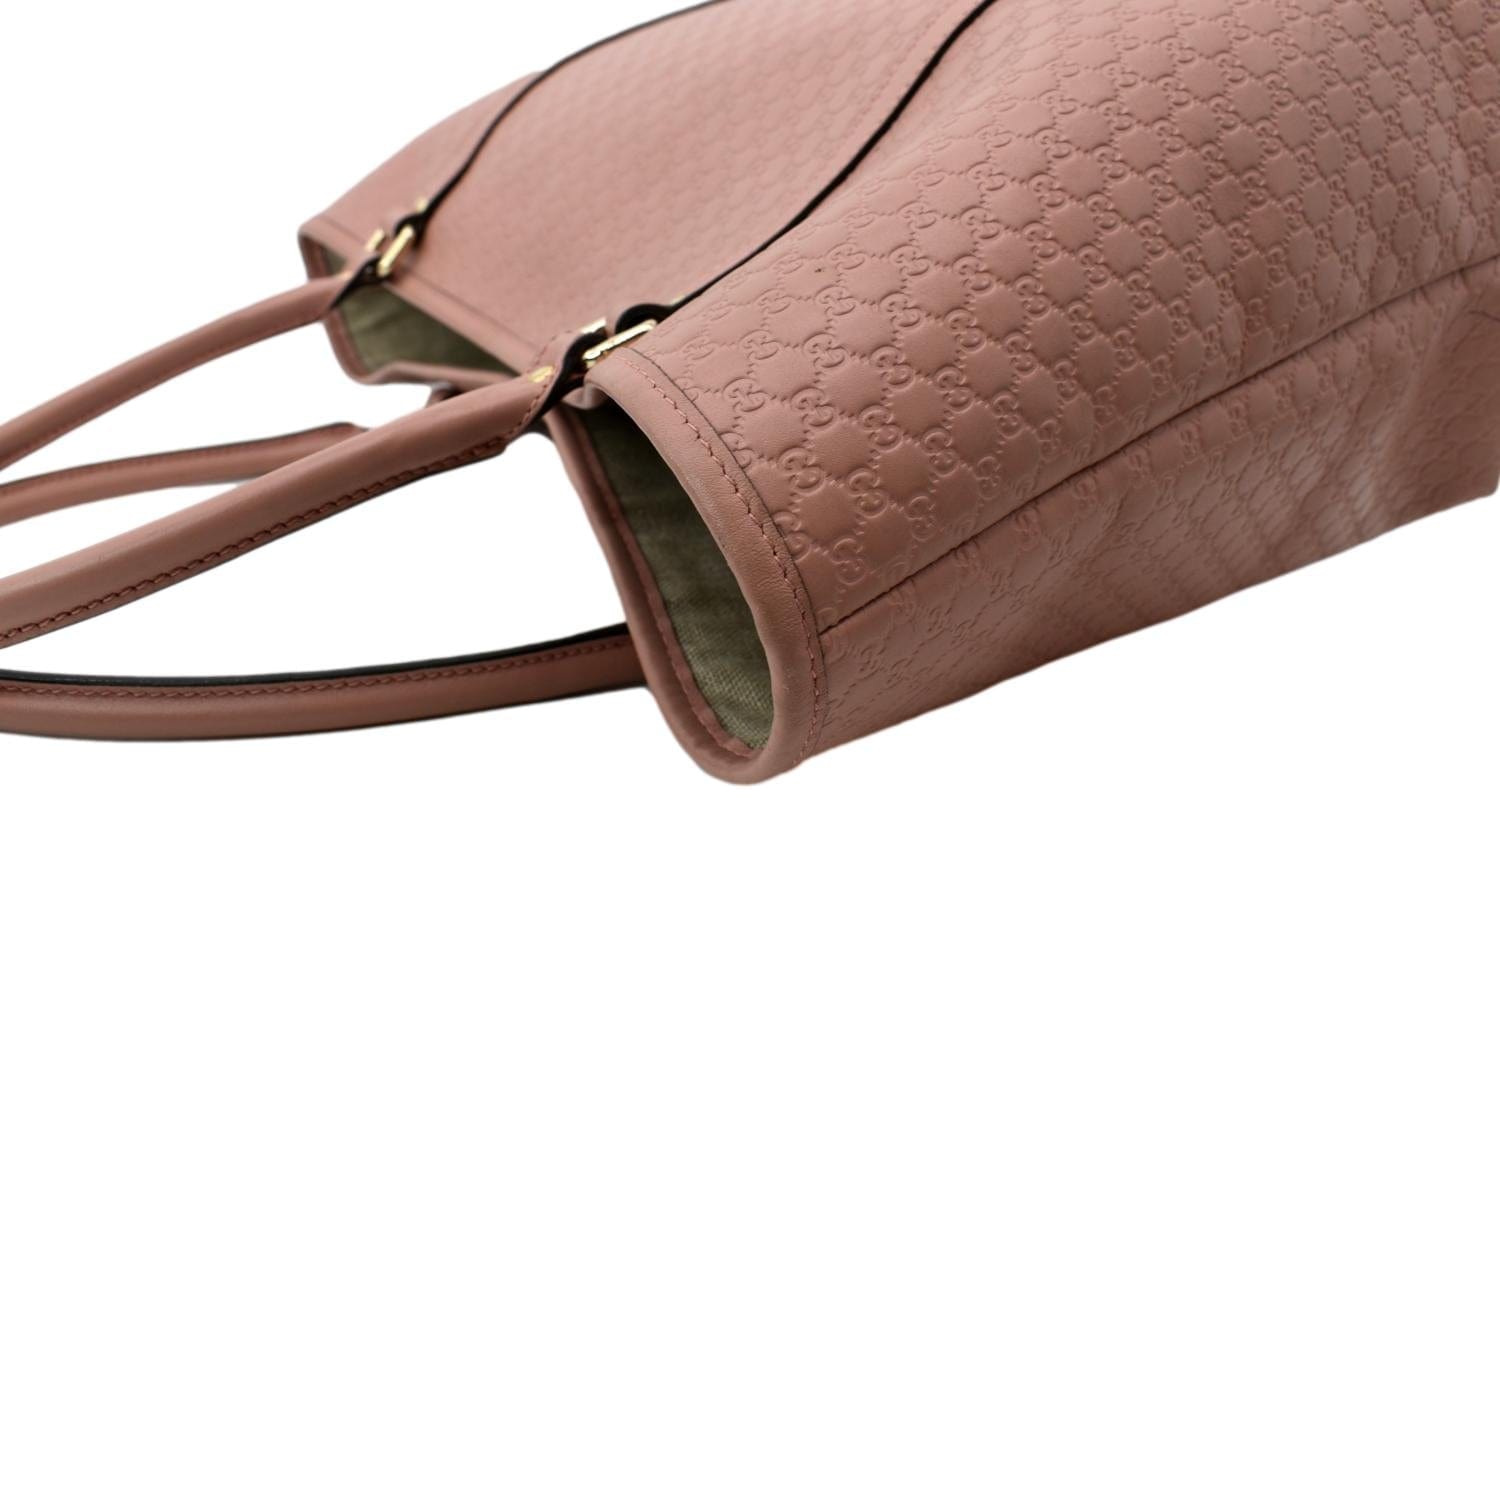 GUCCI Joy Medium Microguccissima Leather Tote Bag Pink 449647